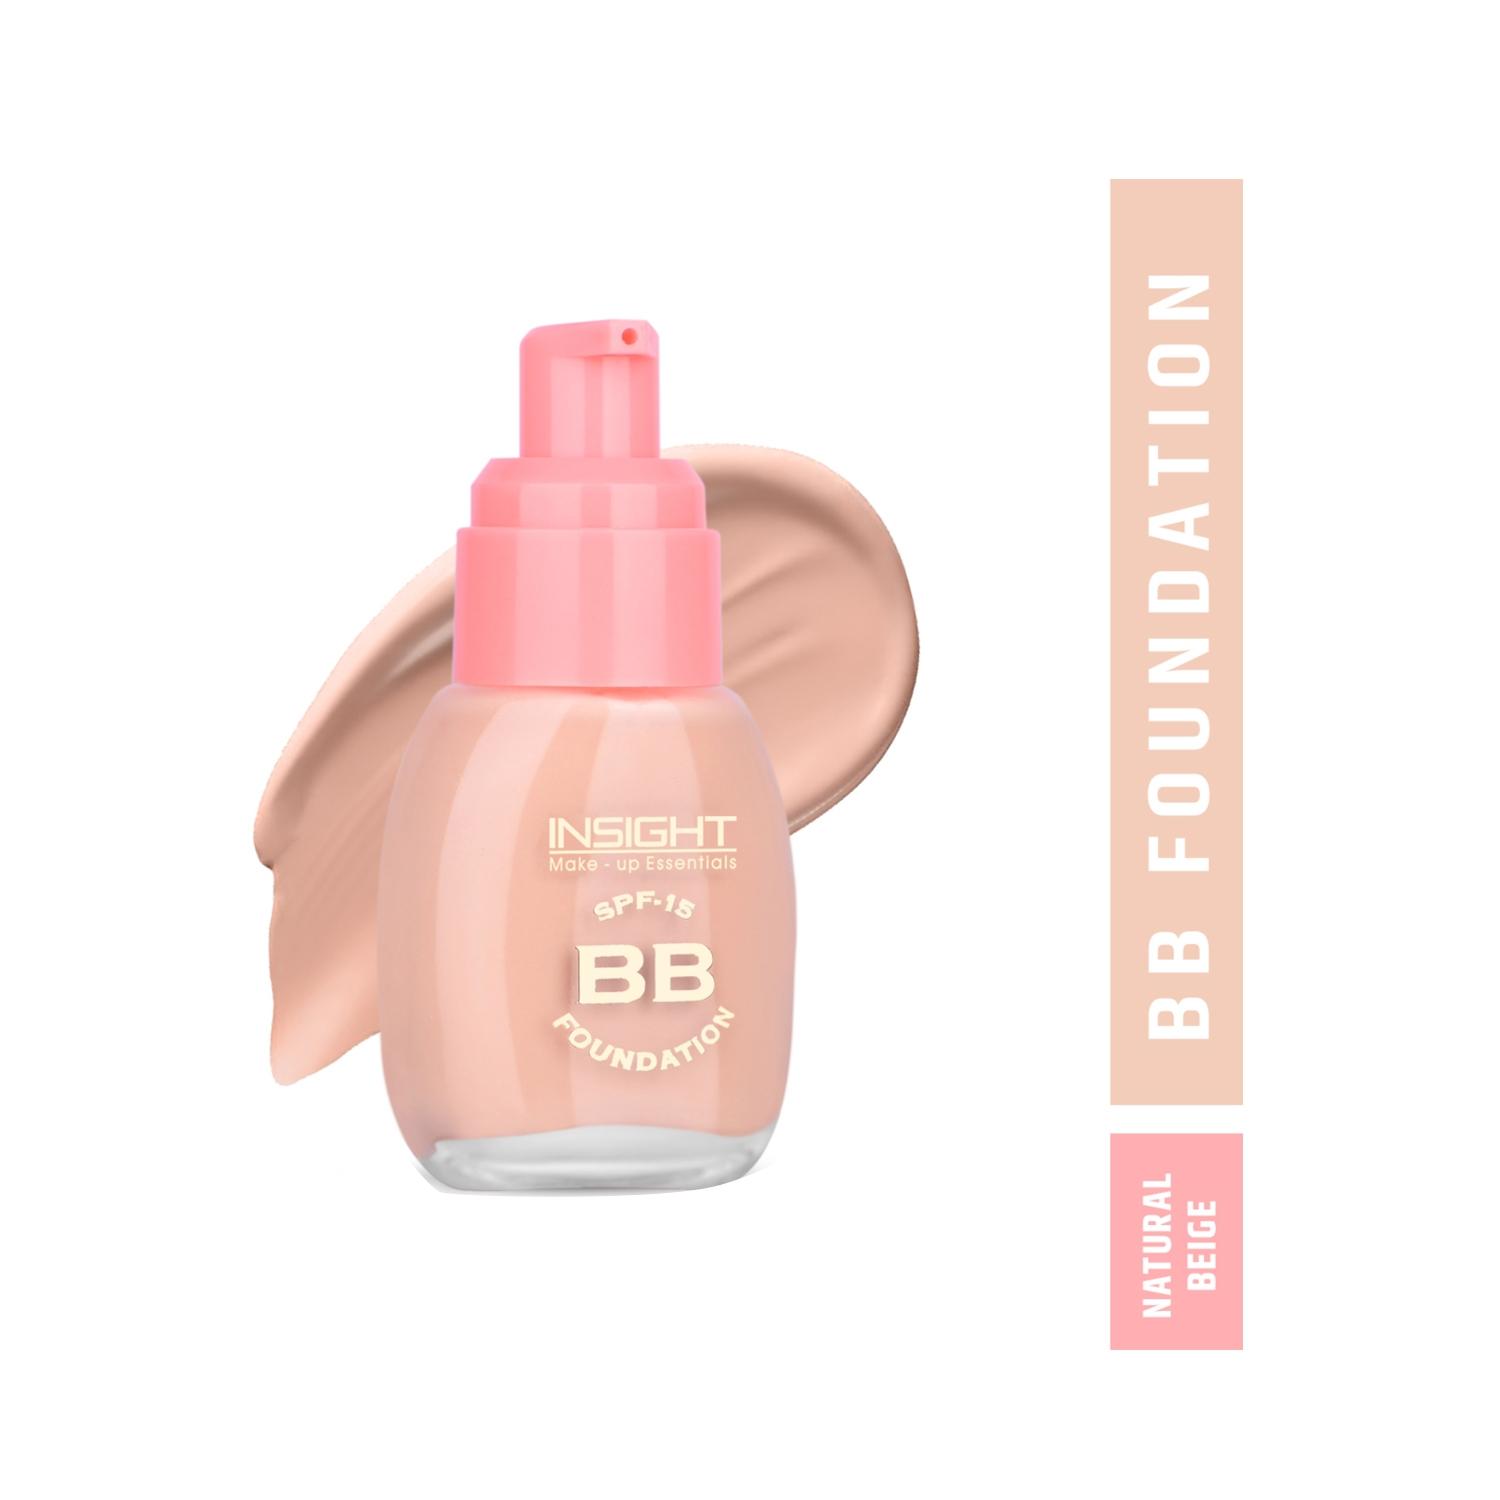 insight cosmetics bb foundation spf 15 - natural beige (30ml)